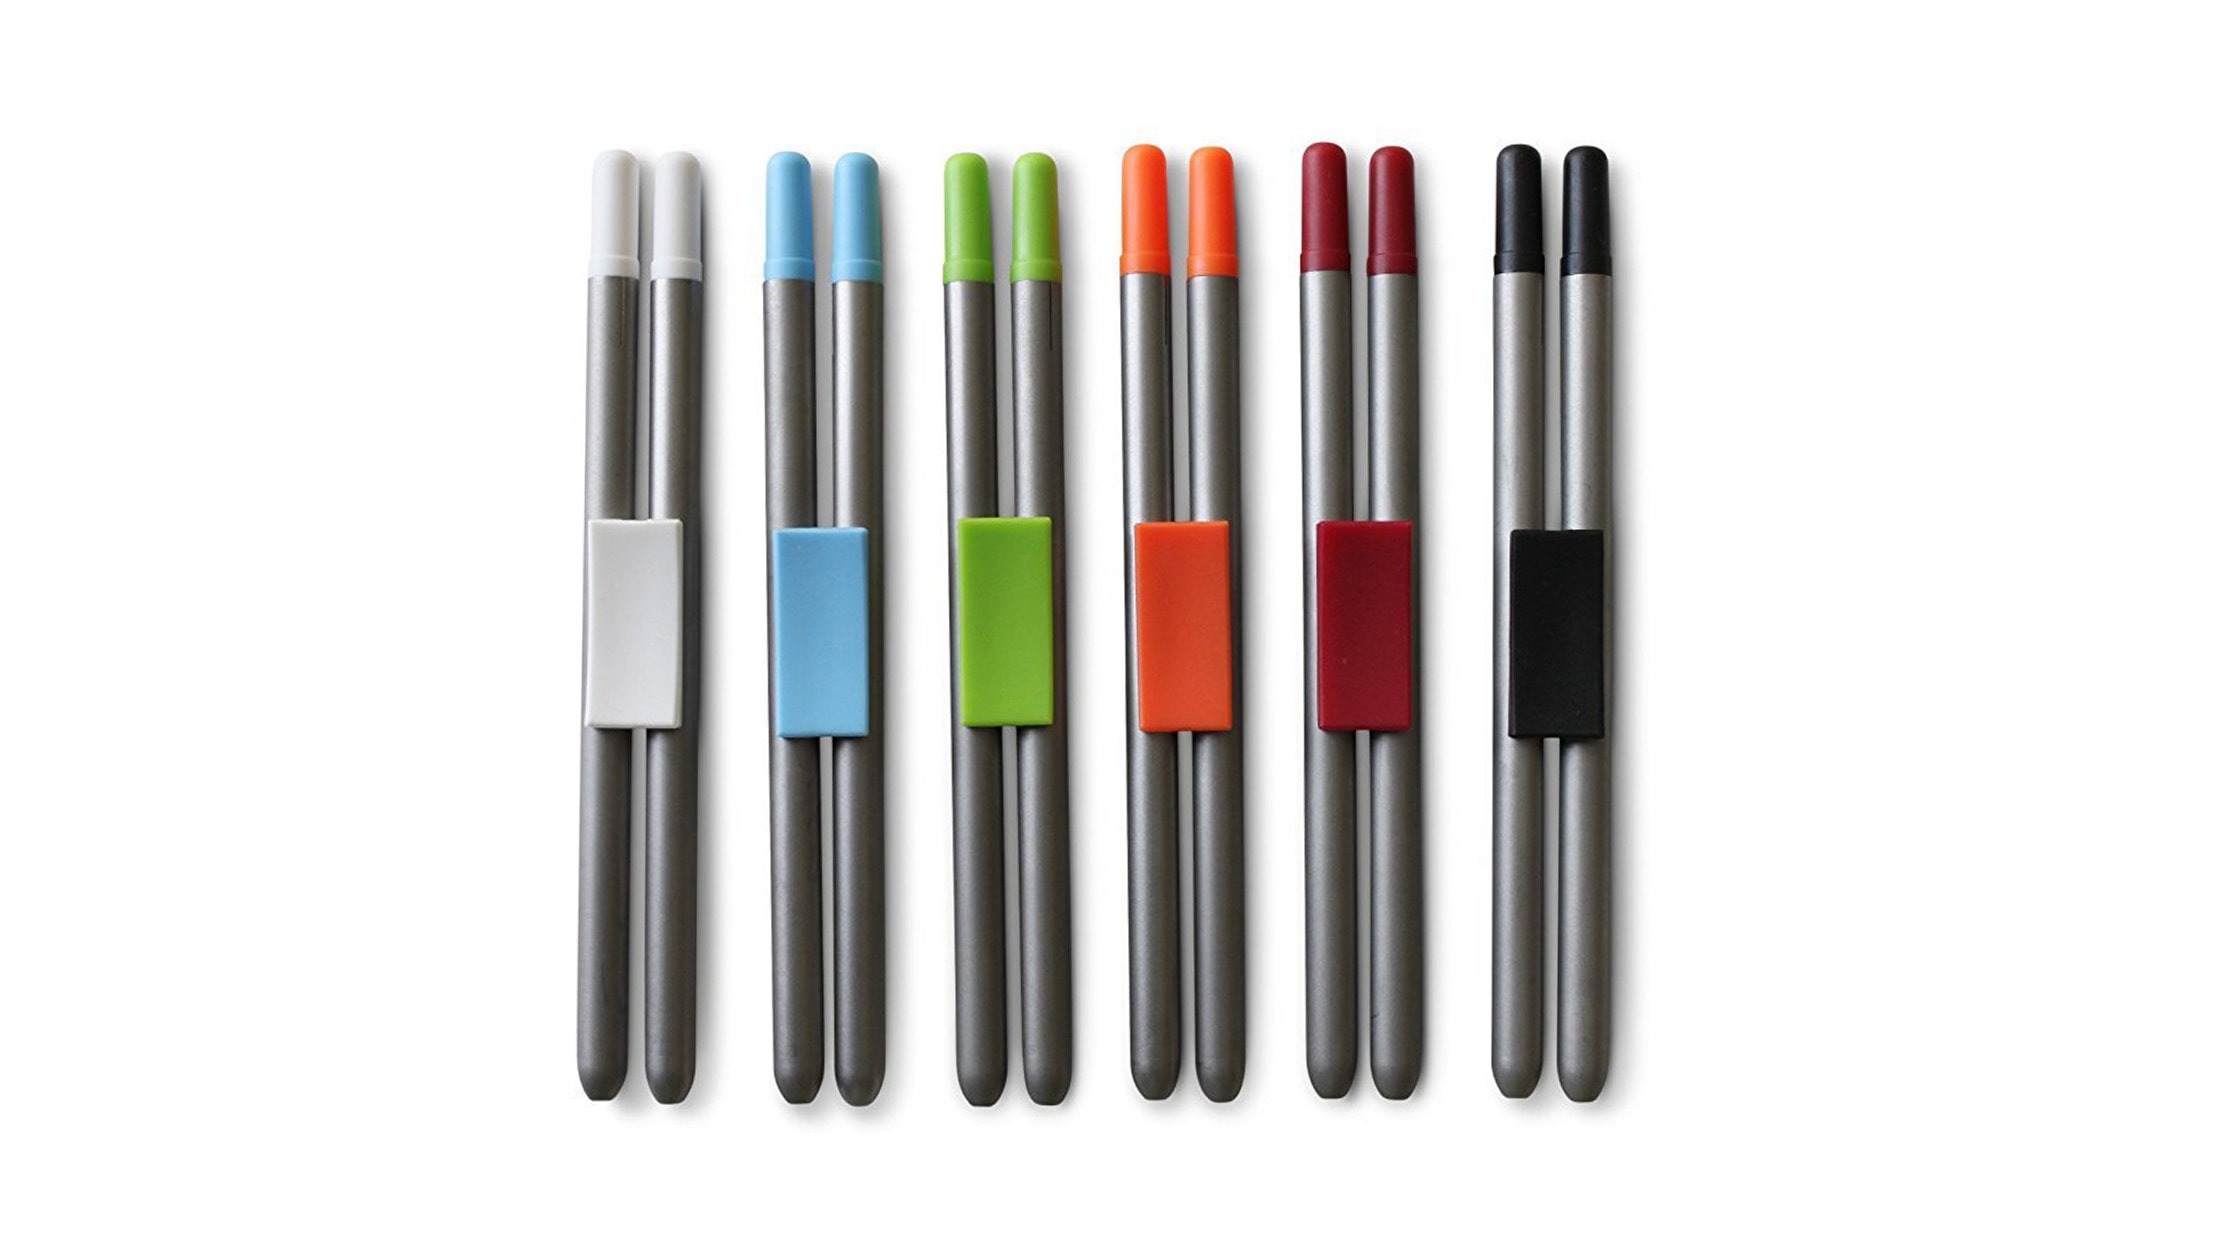 Integral Design Collapsible Chopsticks Colors